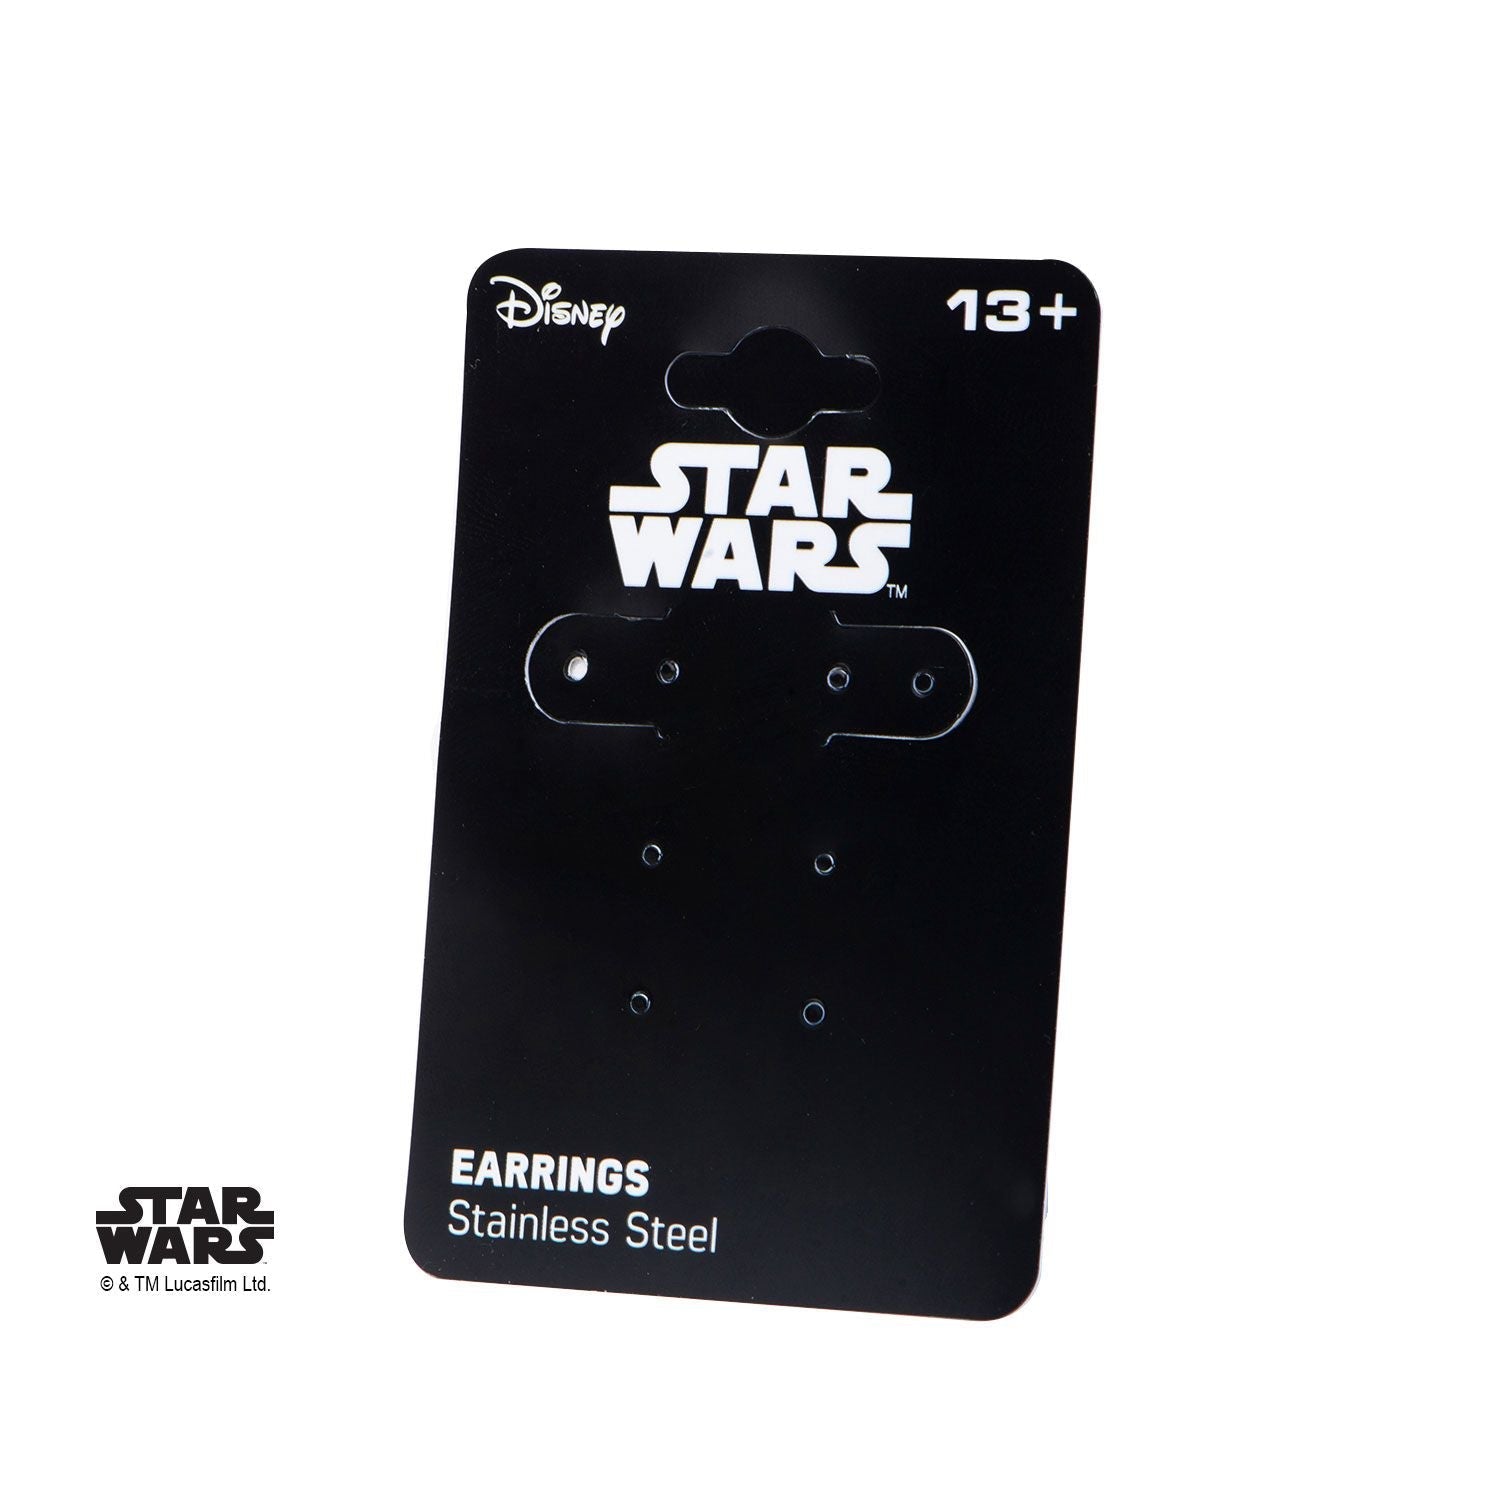 STAR WARS Star Wars Galactic Empire Symbol CZ Hook Dangle Earring B -Rebel Bod-RebelBod